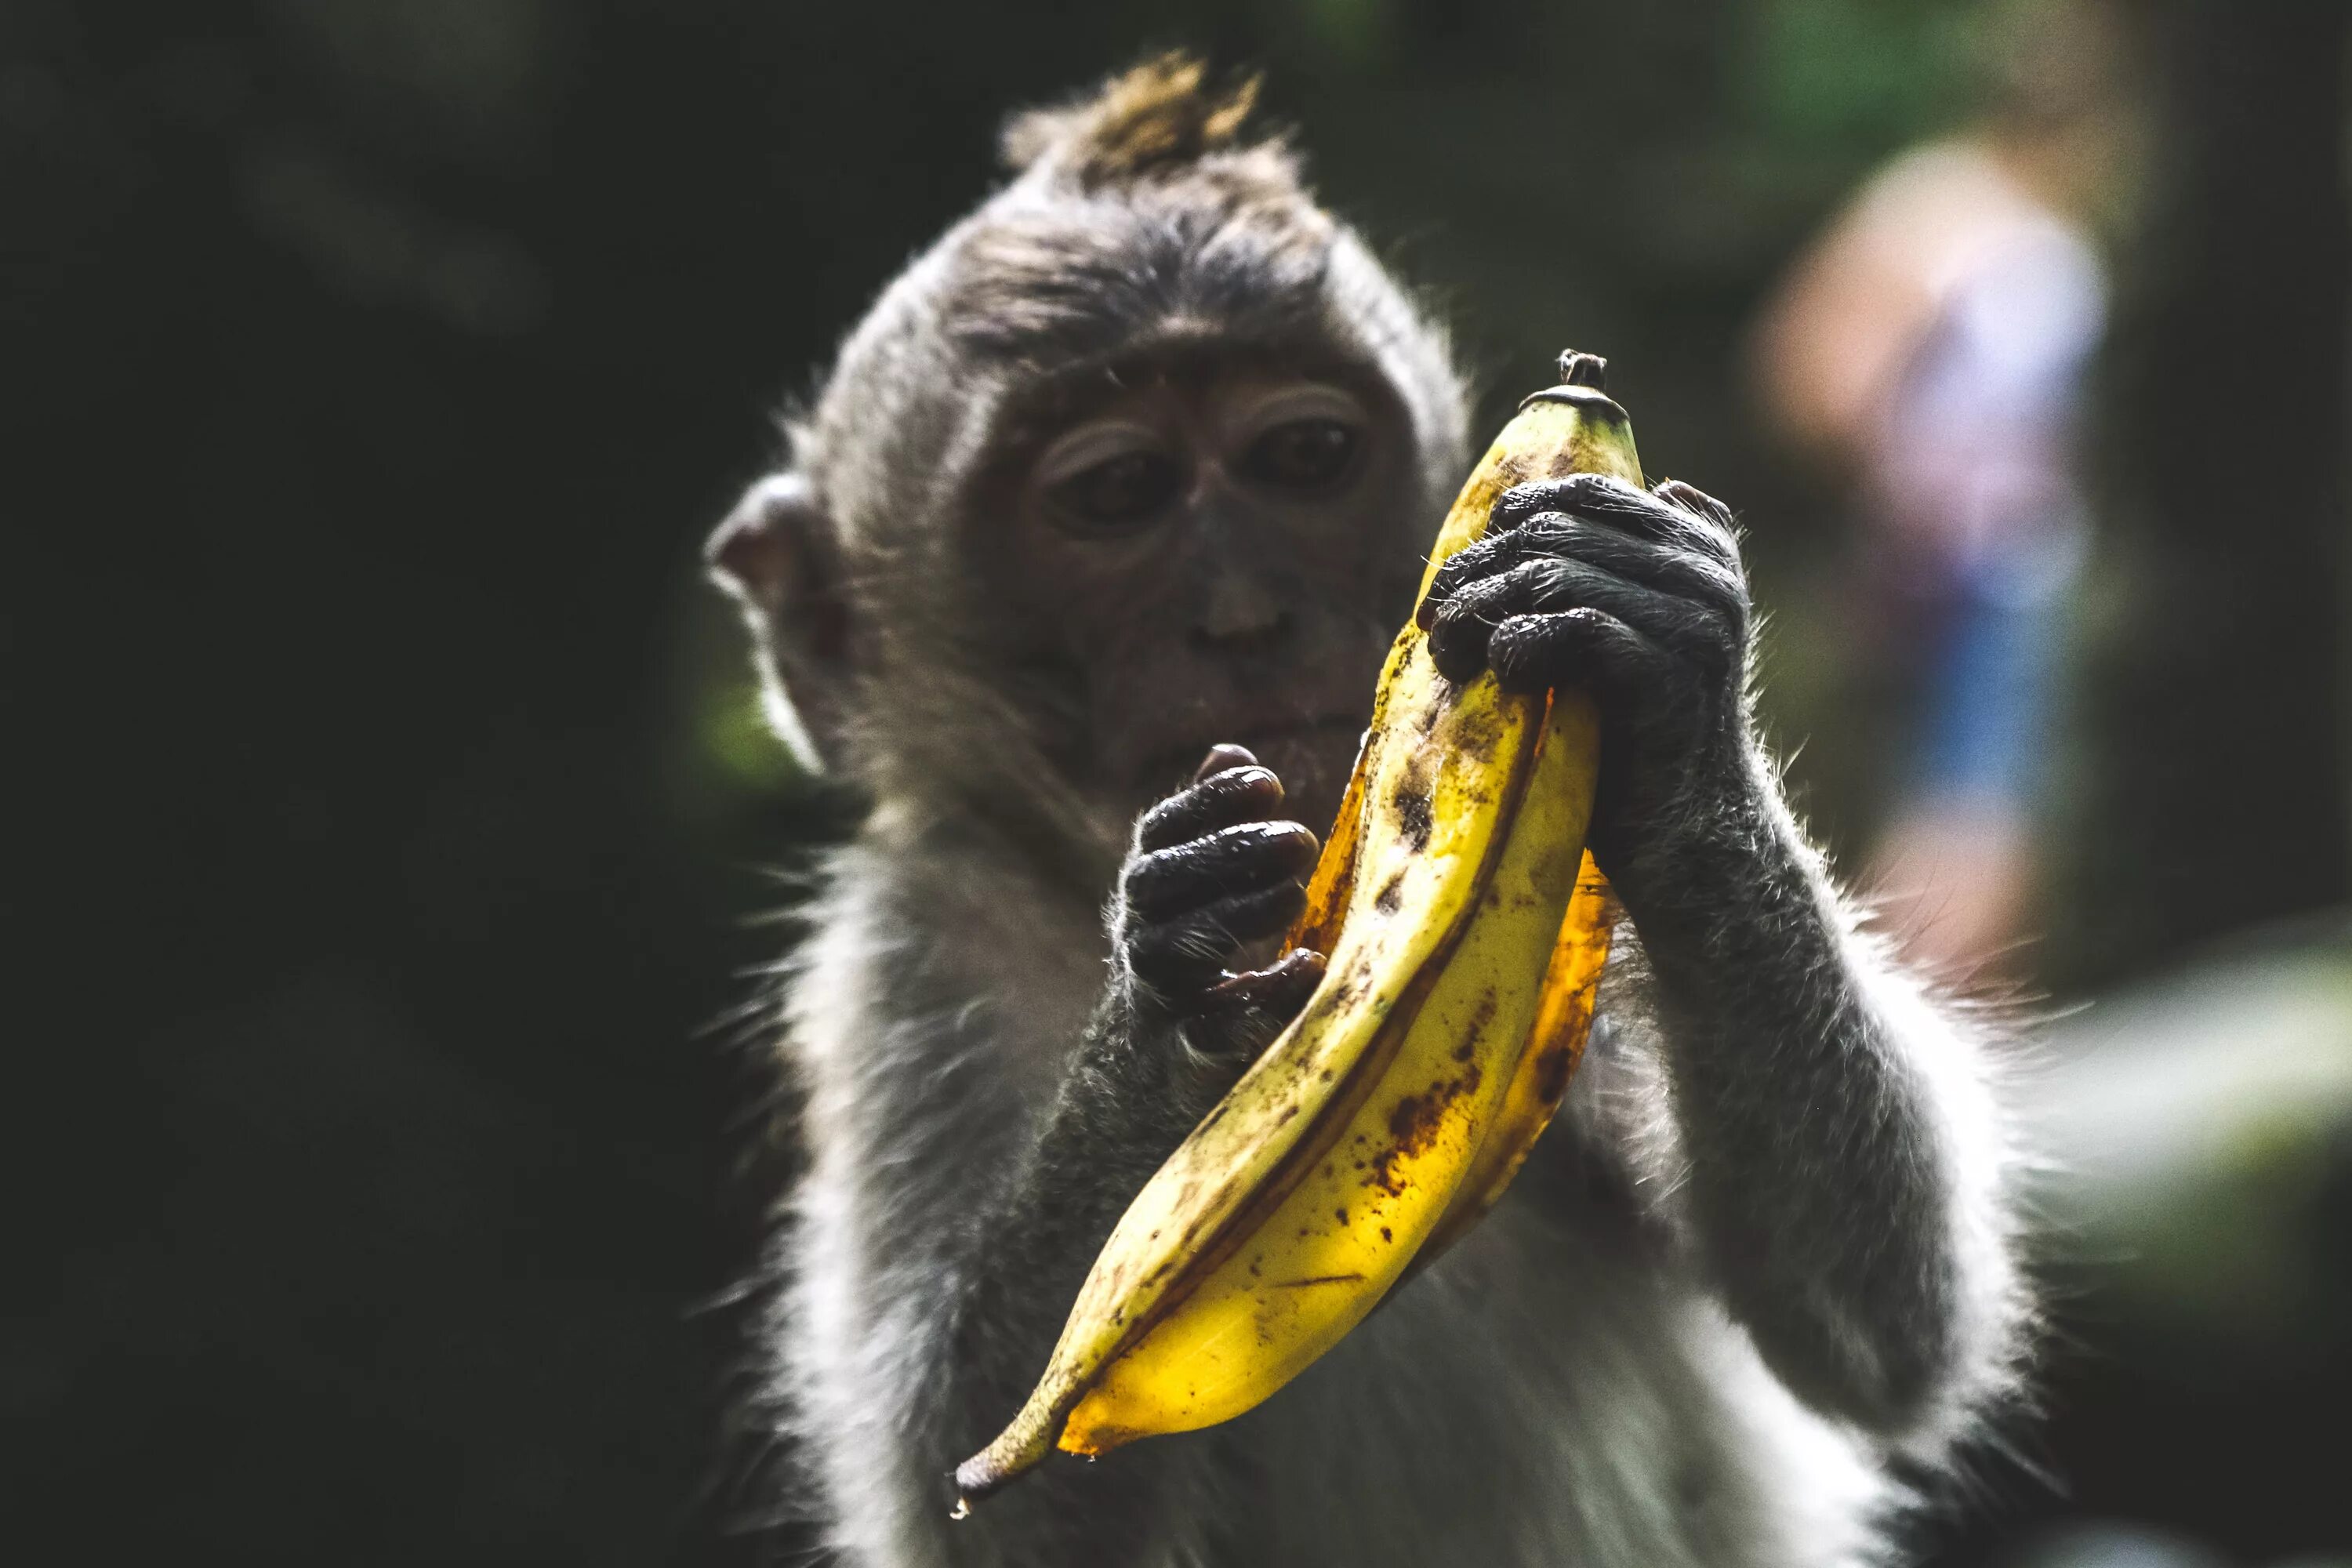 They like bananas. Обезьяна с бананом. Бибизьяна с бонаном. Obezyano s bansnom. Шимпанзе с бананом.